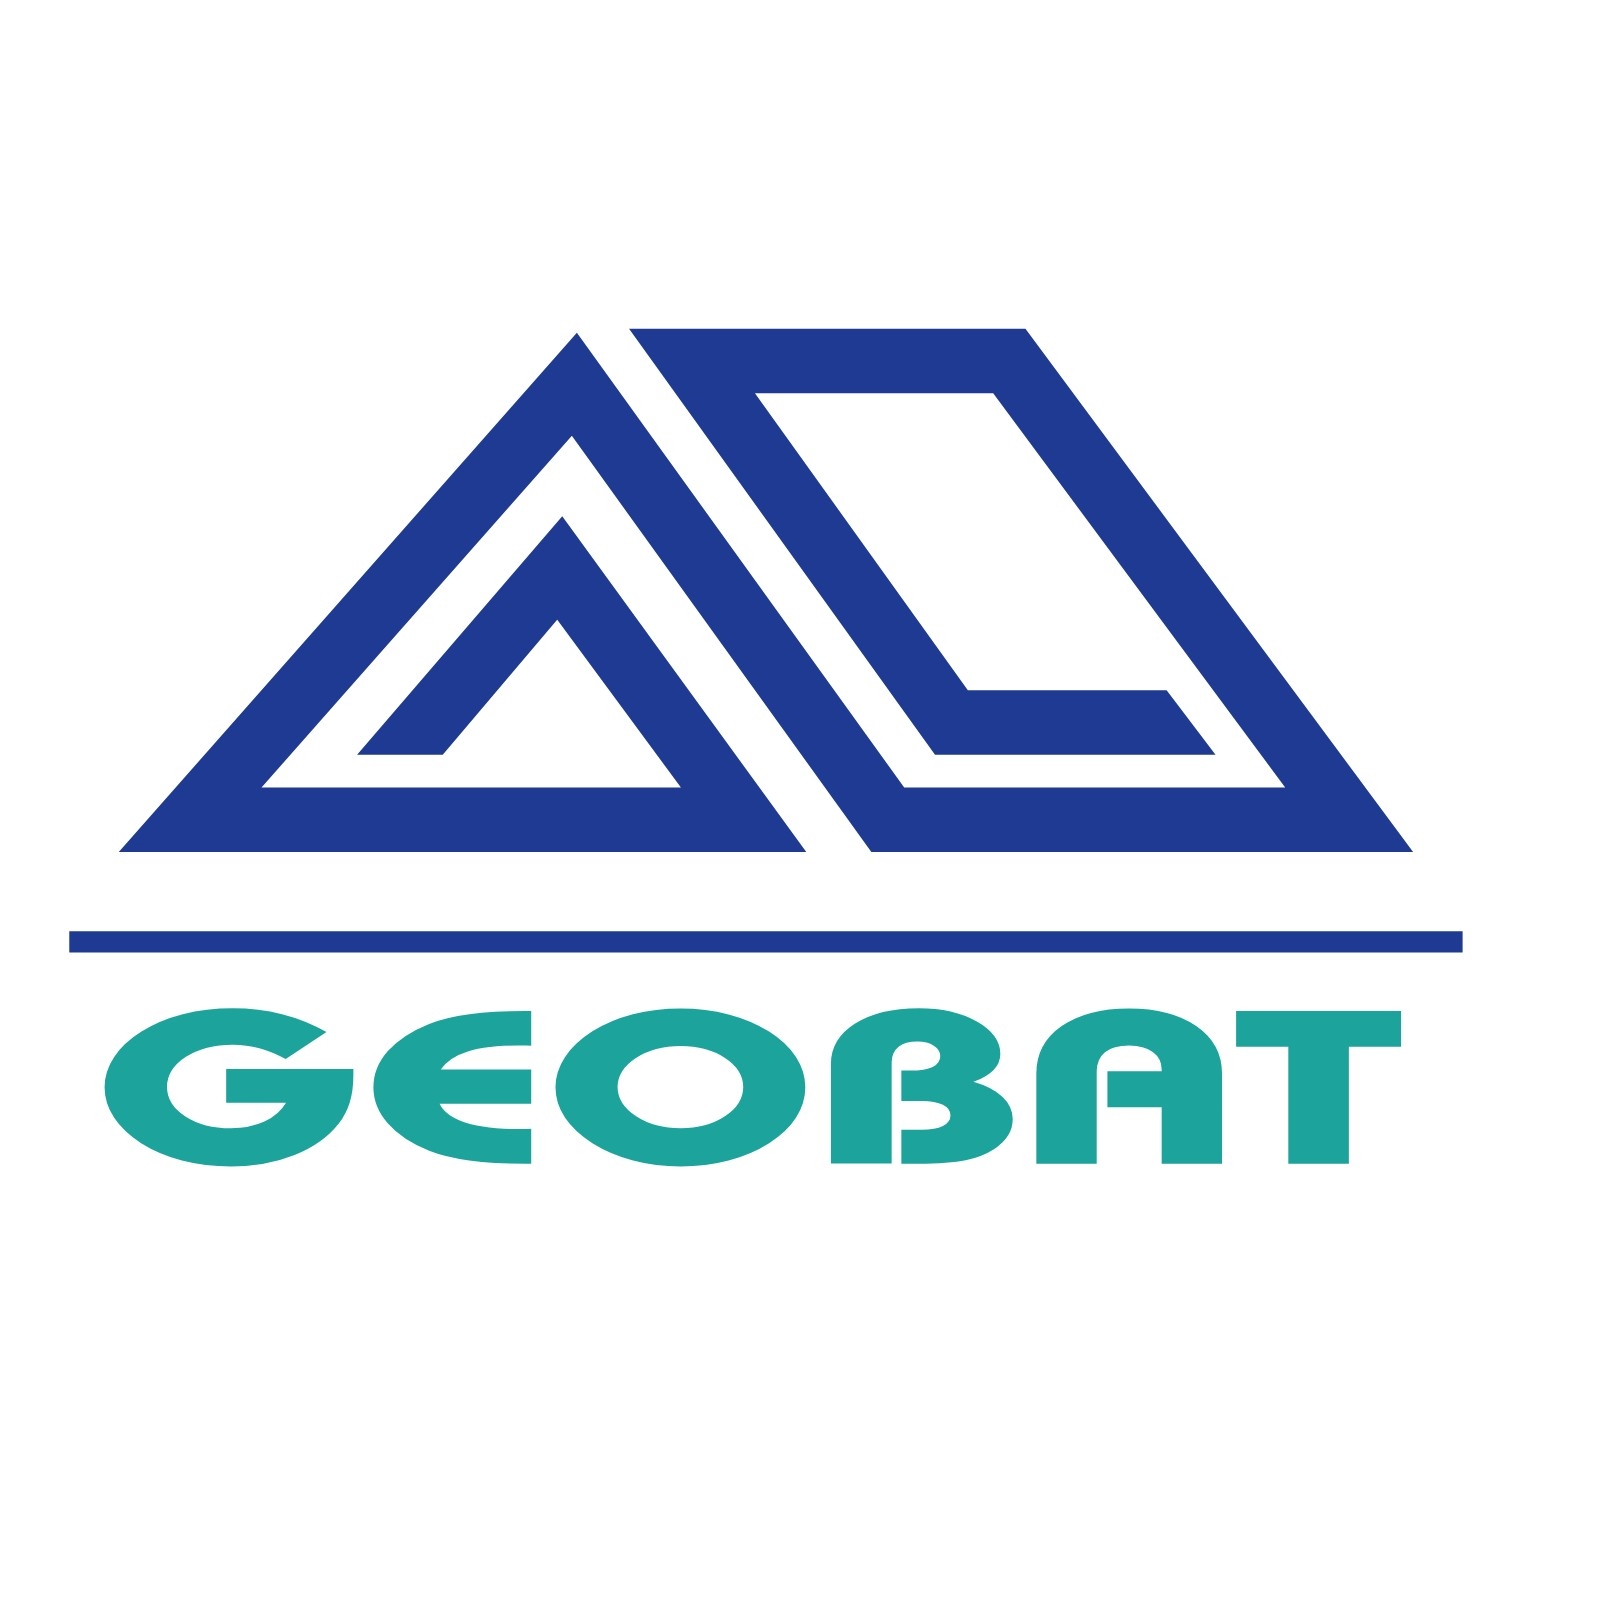 GEOBAT logo